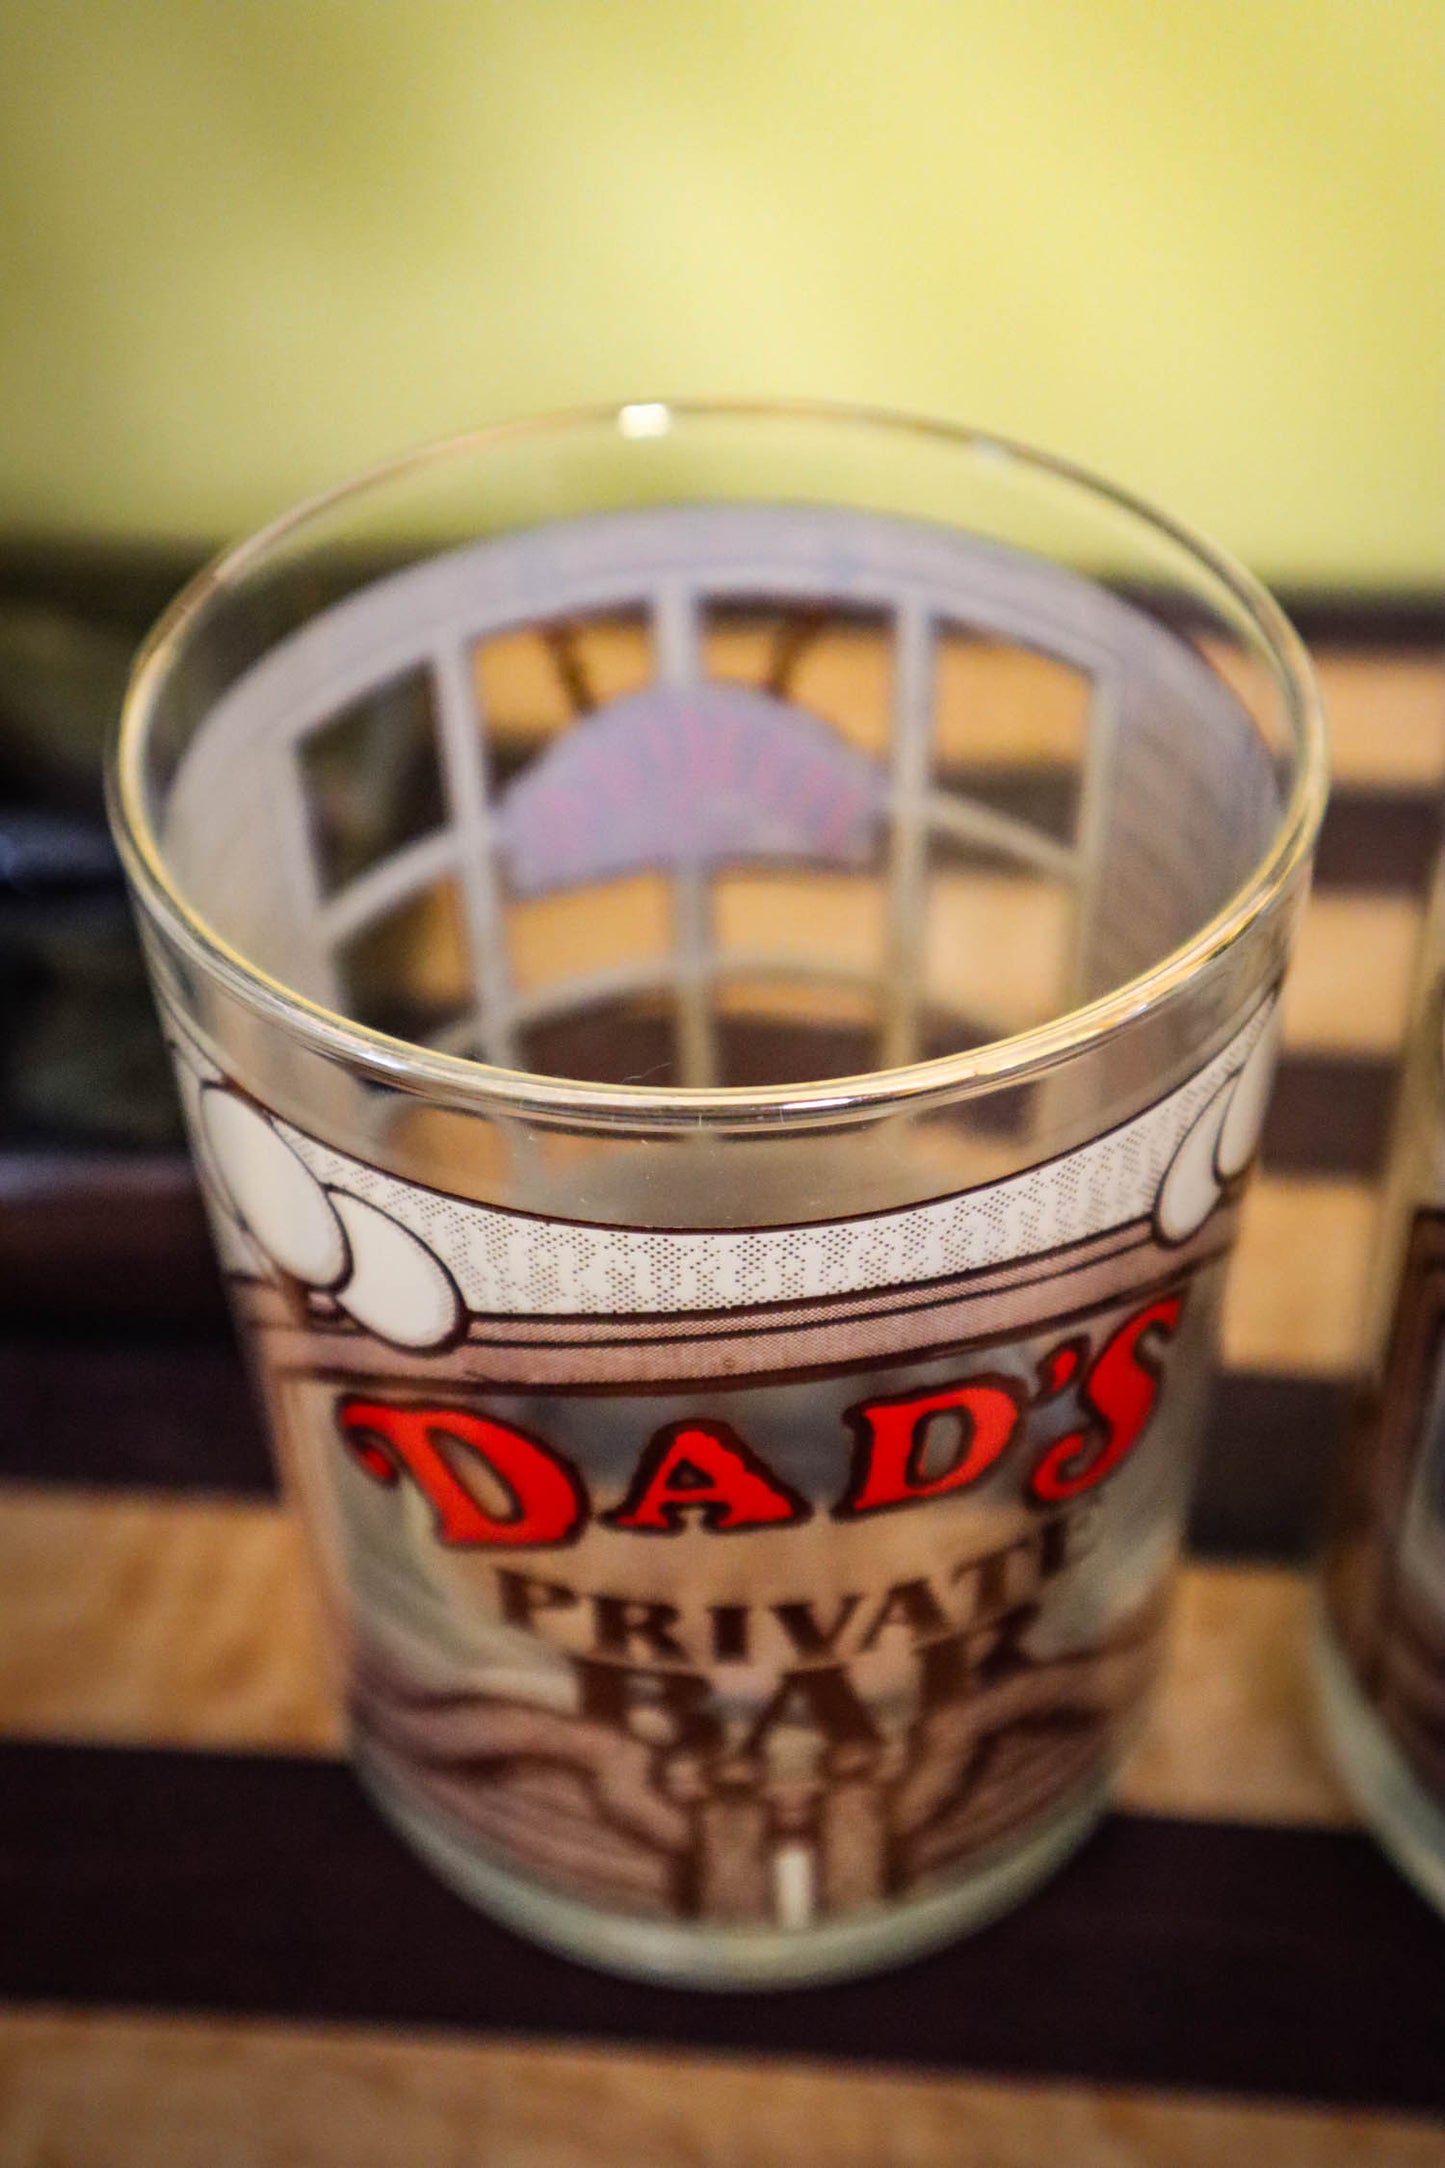 Dad's Private Bar Glasses